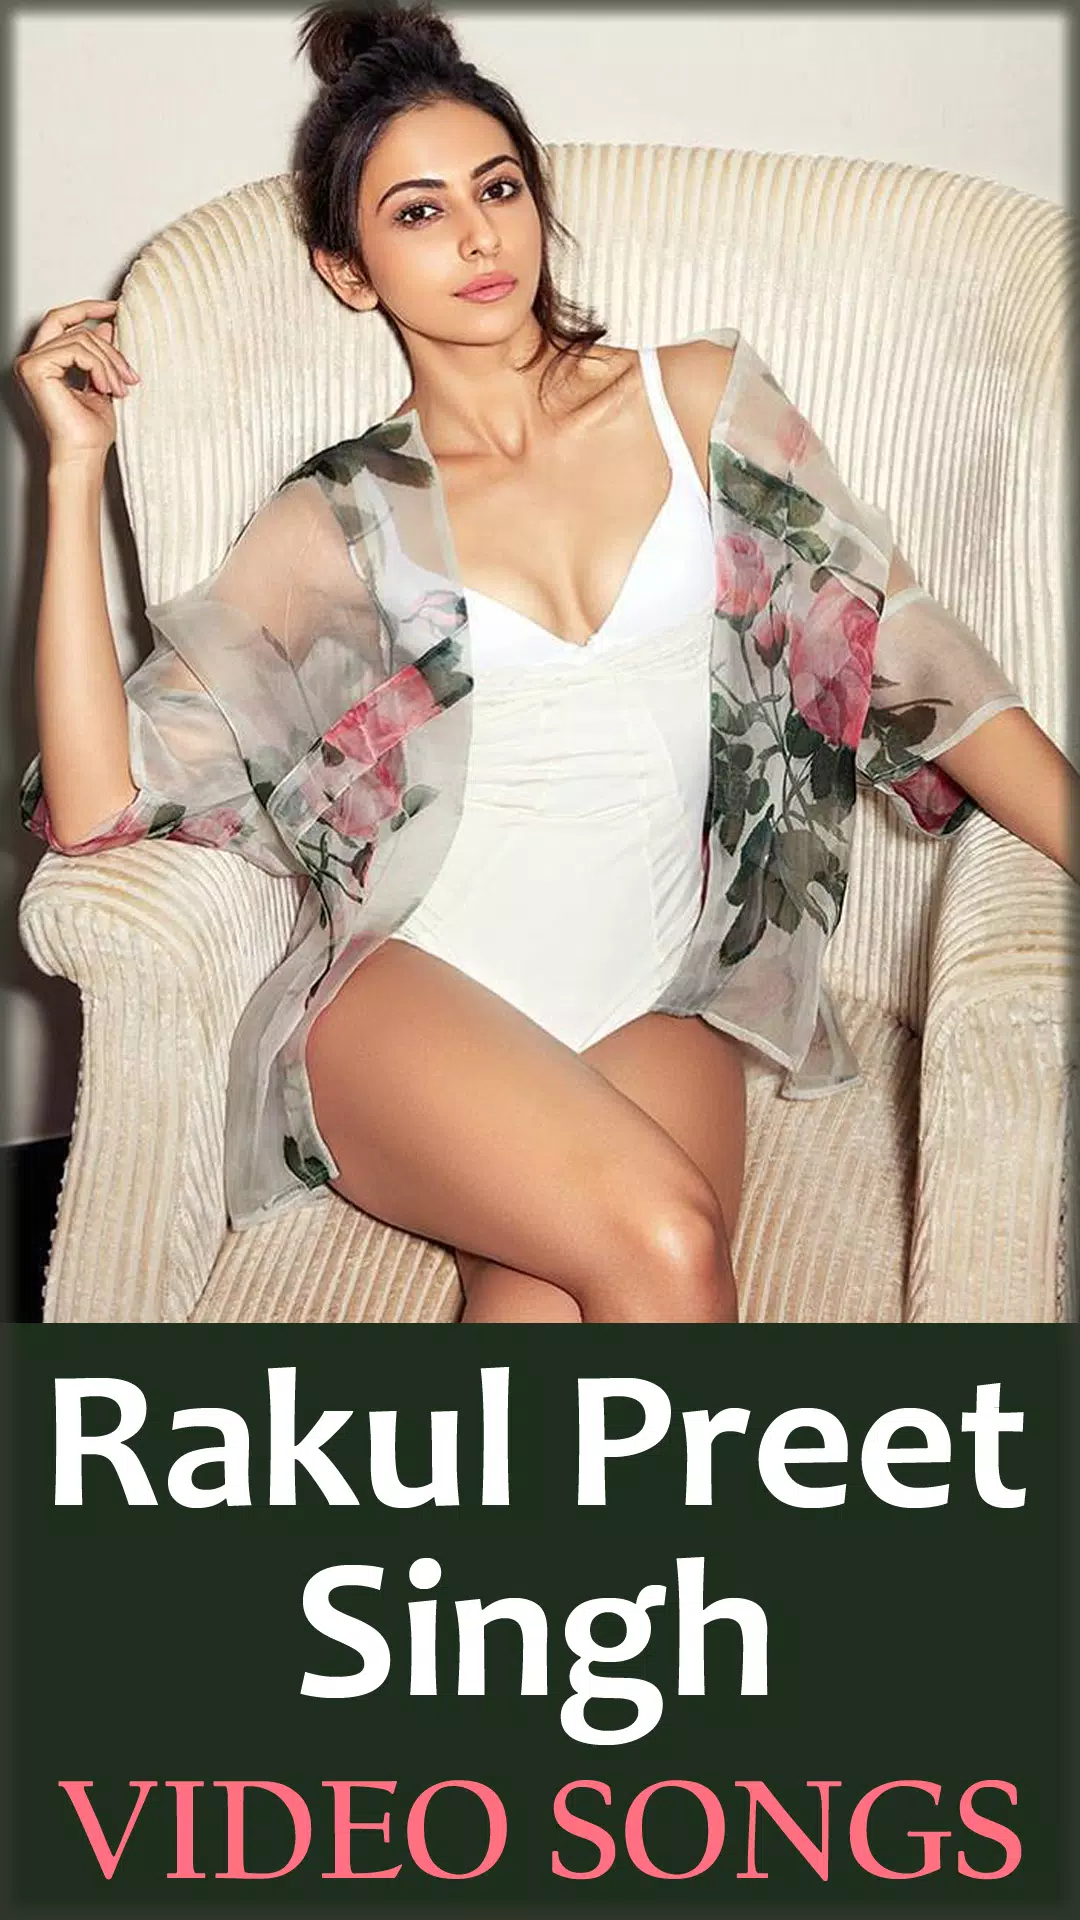 Rakul Preet Singh Sex Video - Rakul Preet Singh Hot Hd Video Songs App APK for Android Download